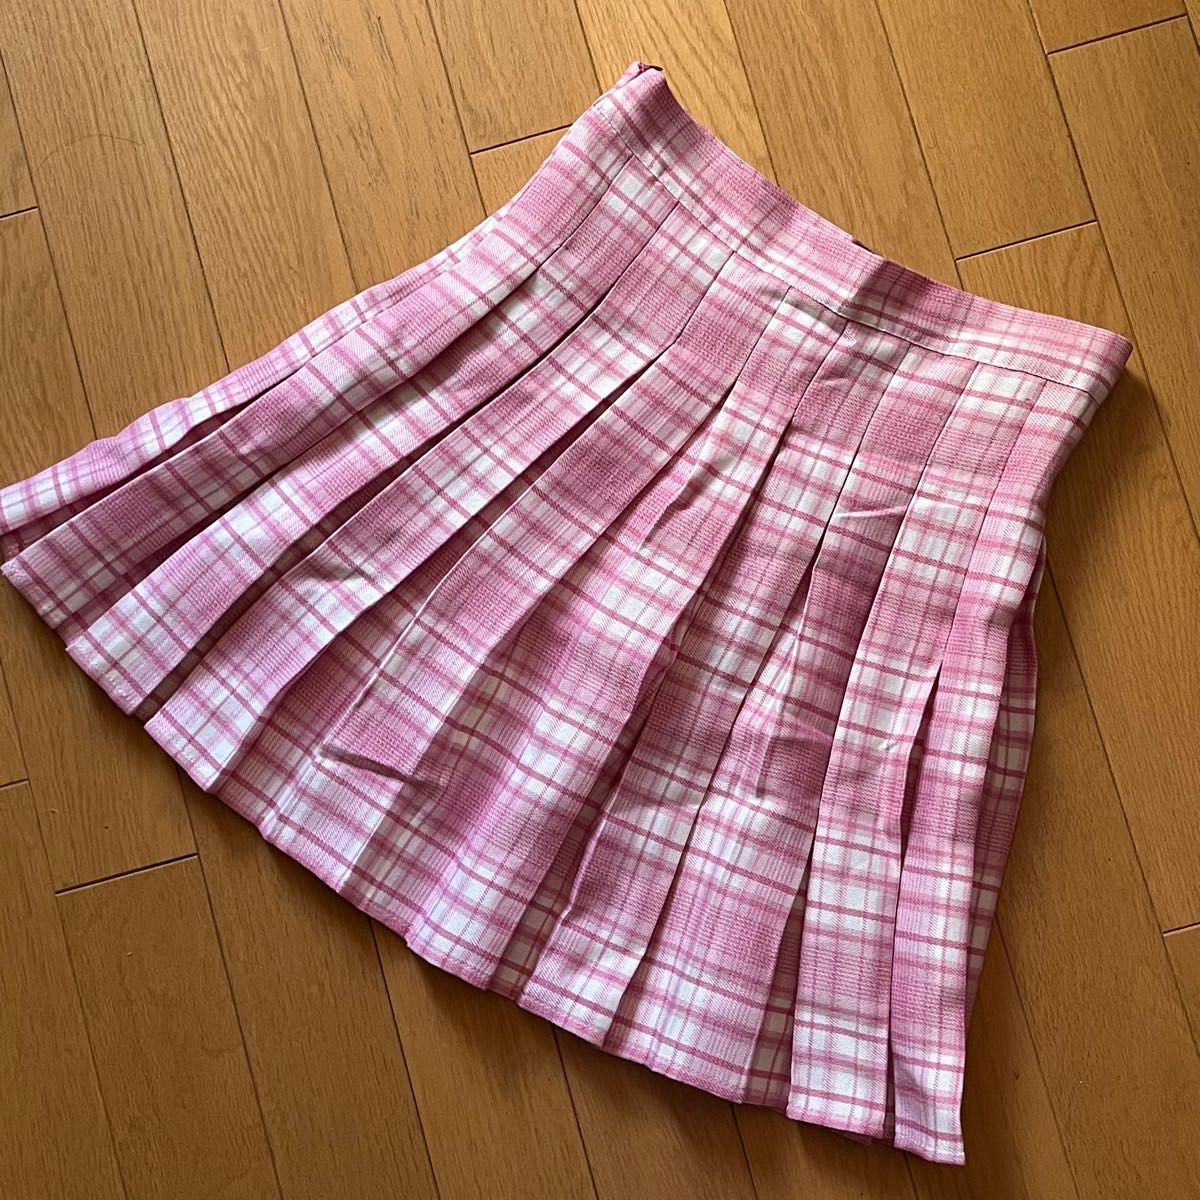 SHEIN ROMWE KAWAII ピンク チェック プリーツスカート 制服風 ミニスカート コスプレ など